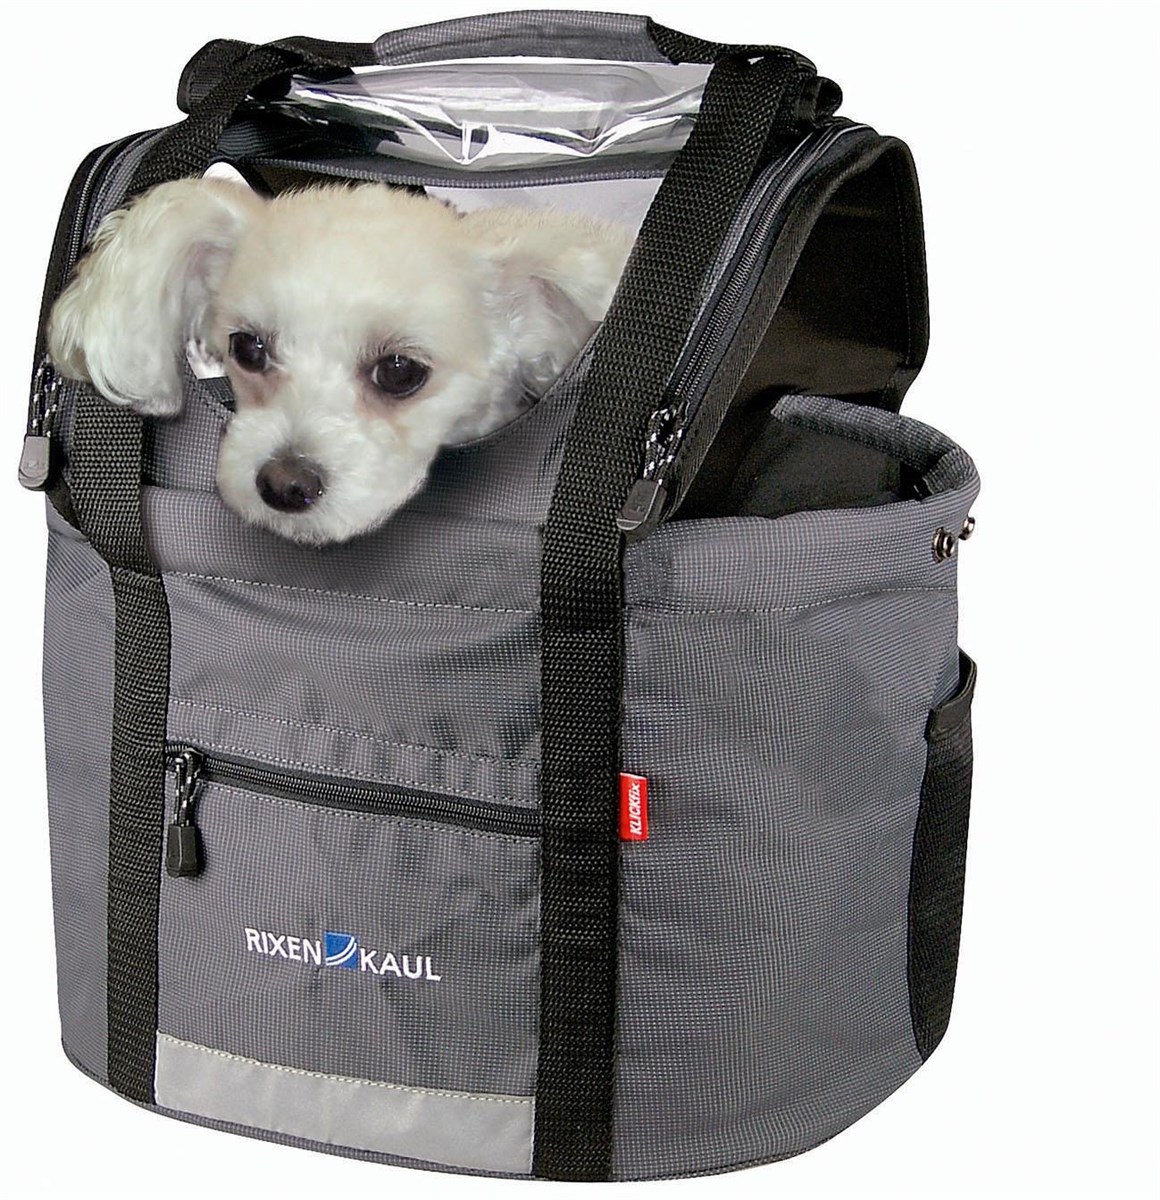 Rixen Kaul Doggy Handlebar Bag product image